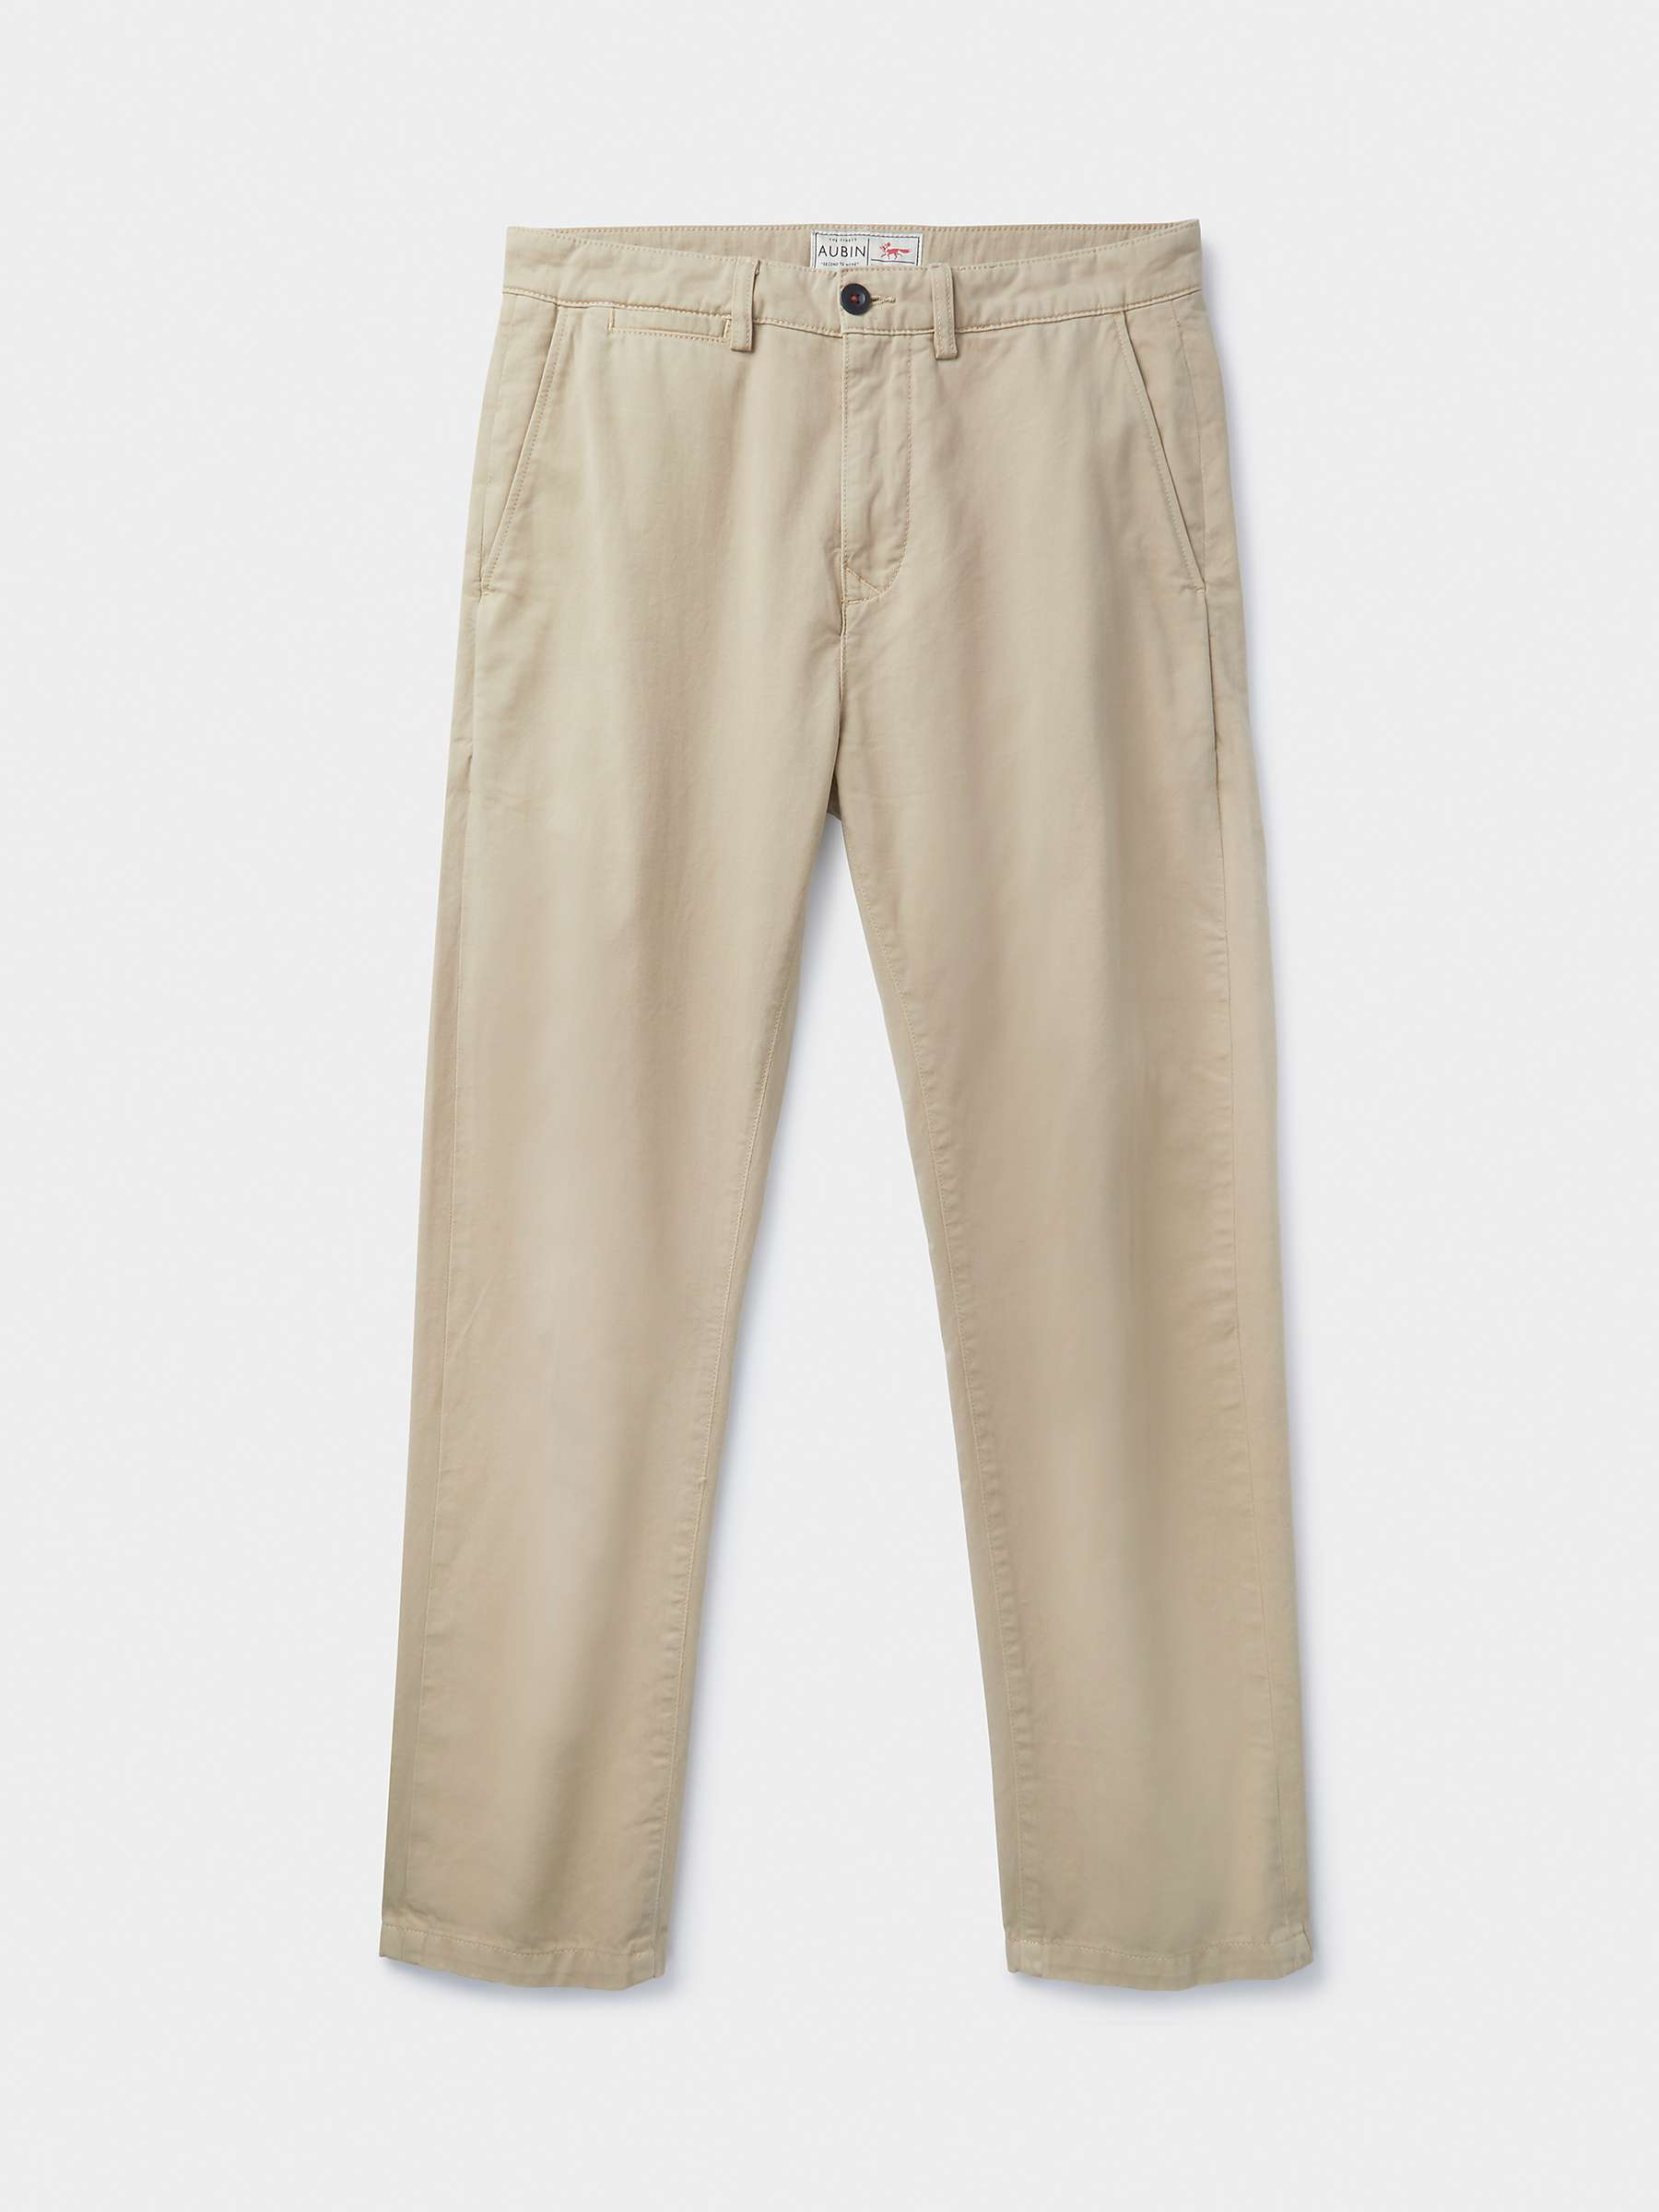 Buy Aubin Melton Chino Trousers Online at johnlewis.com